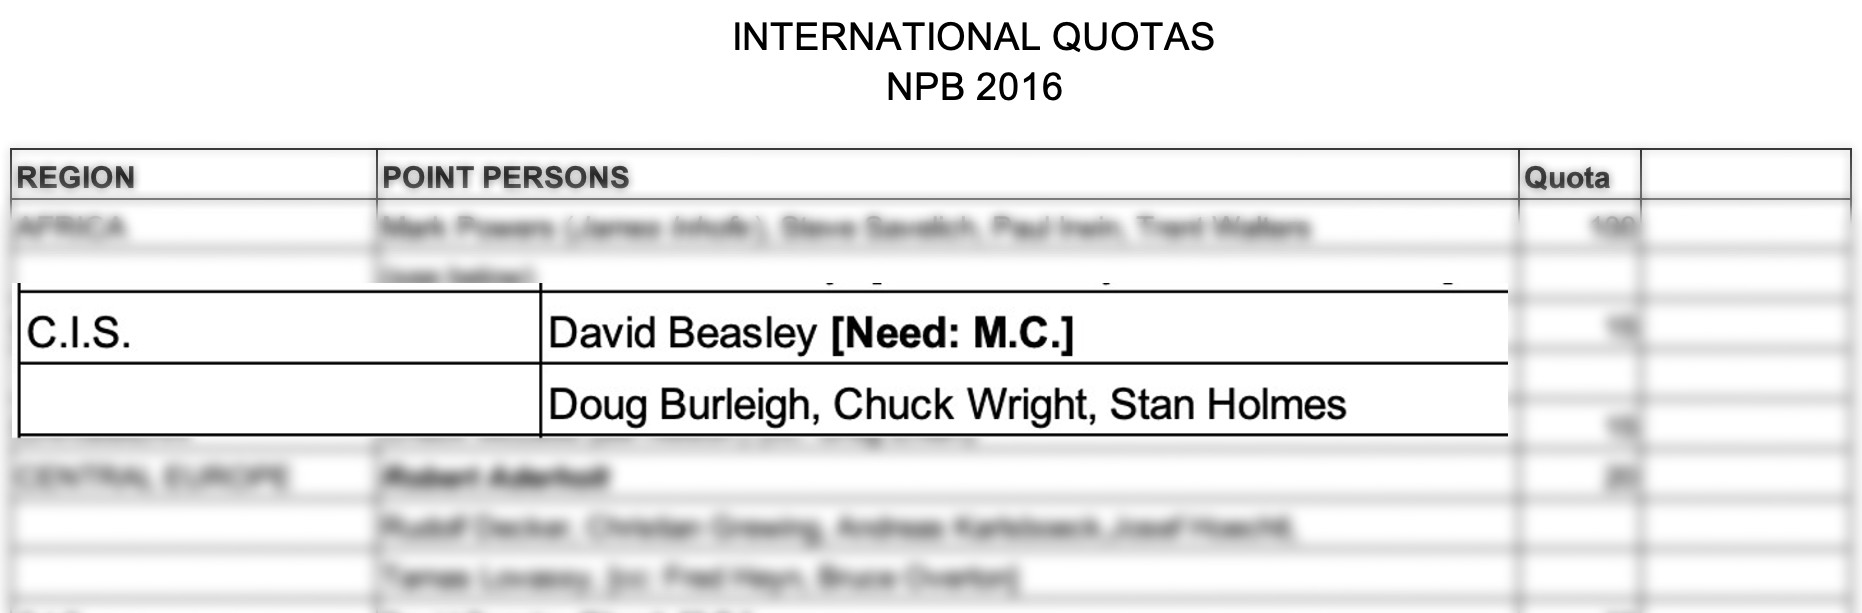 2016 NPB International Quotas Inset -CIS-